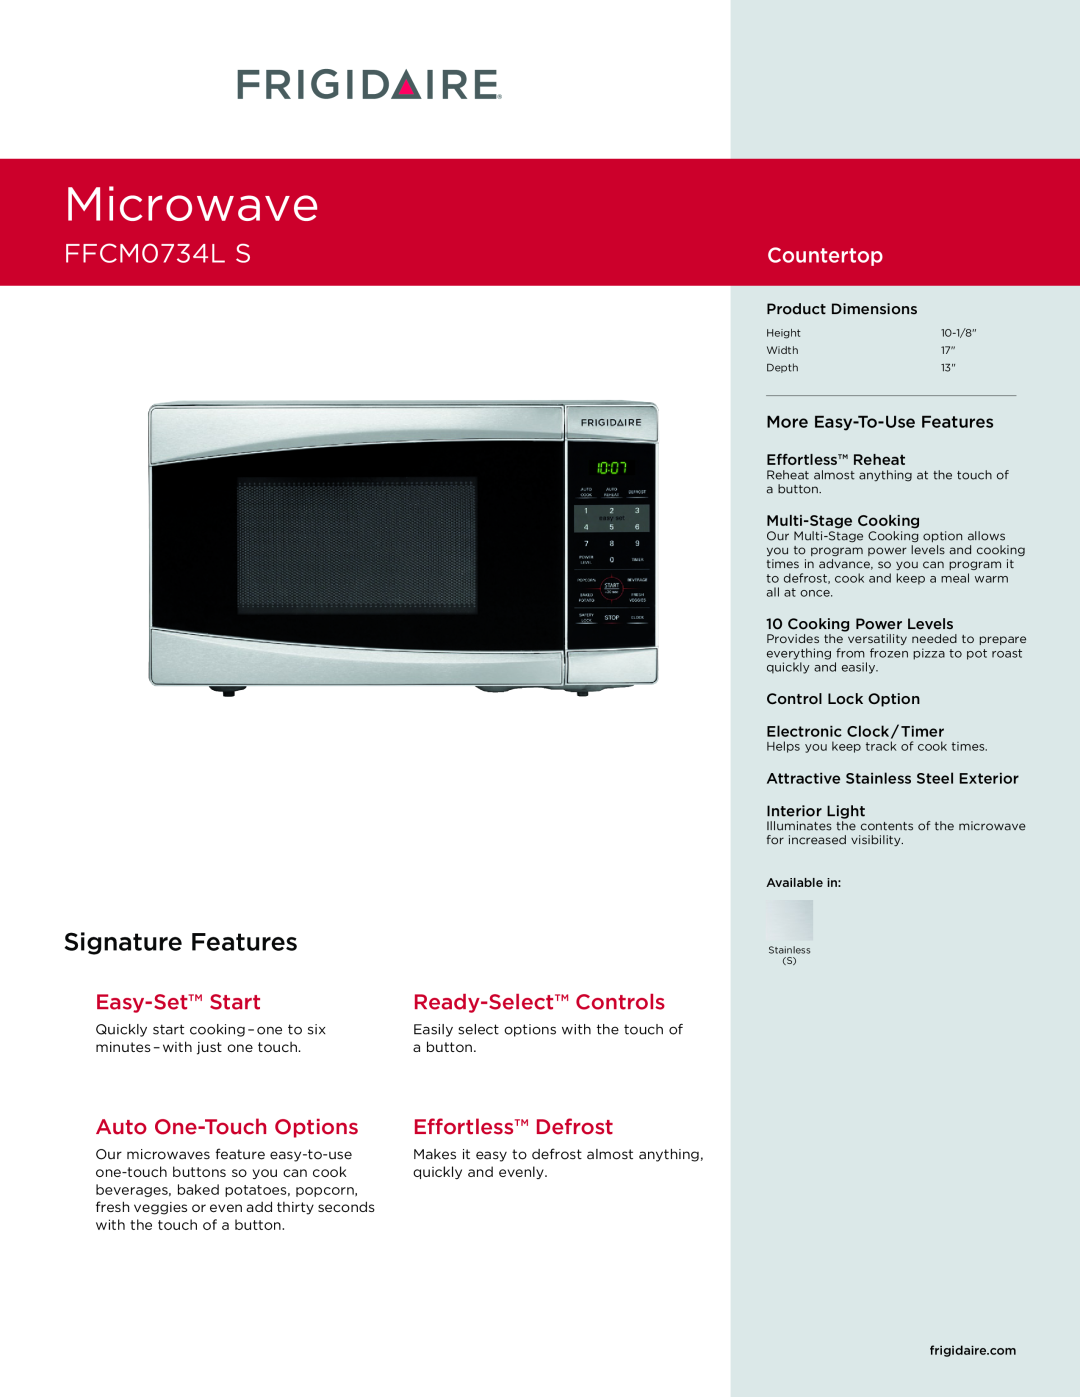 Frigidaire FFCM0734L S dimensions Microwave, Signature Features, Countertop, Easy-SetStart, Auto One-TouchOptions 